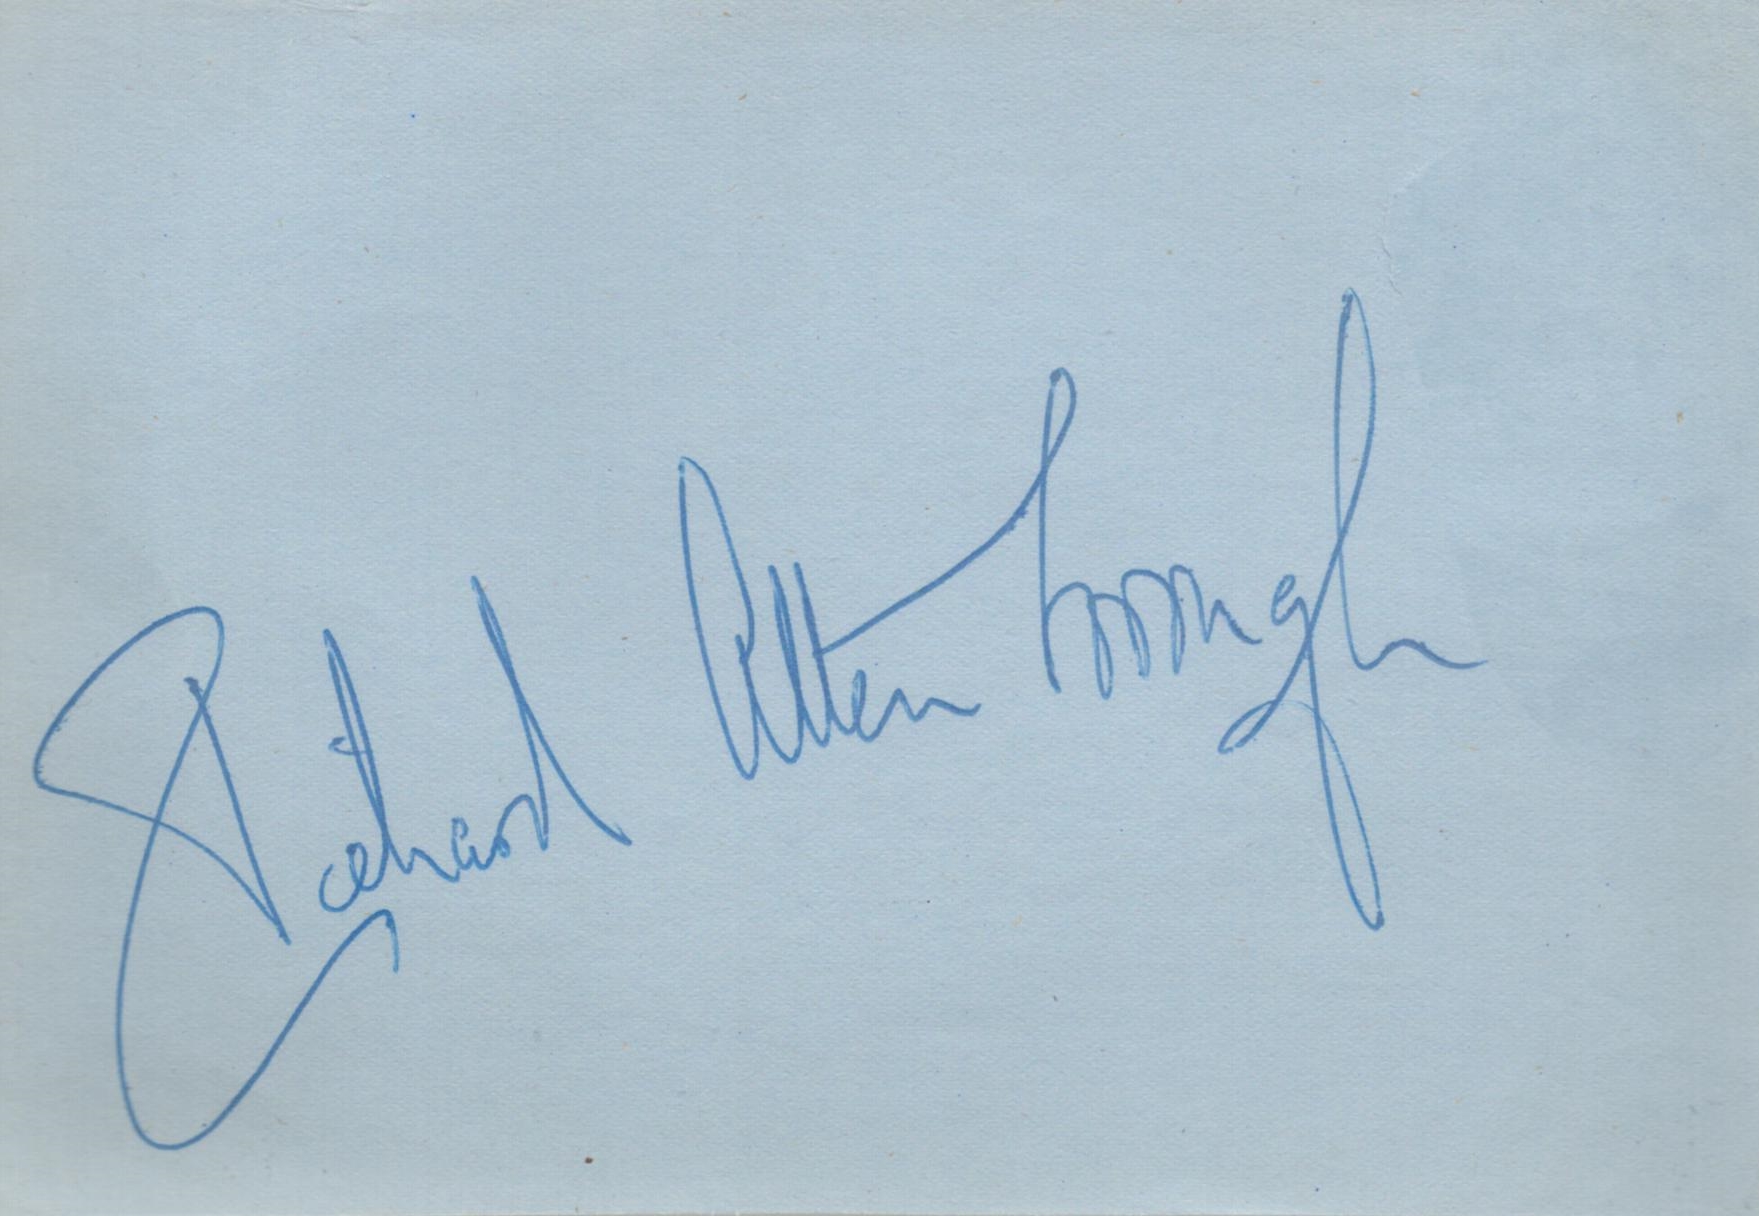 Richard Attenborough signed 6x4 album page. Richard Samuel Attenborough, Baron Attenborough Kt CBE